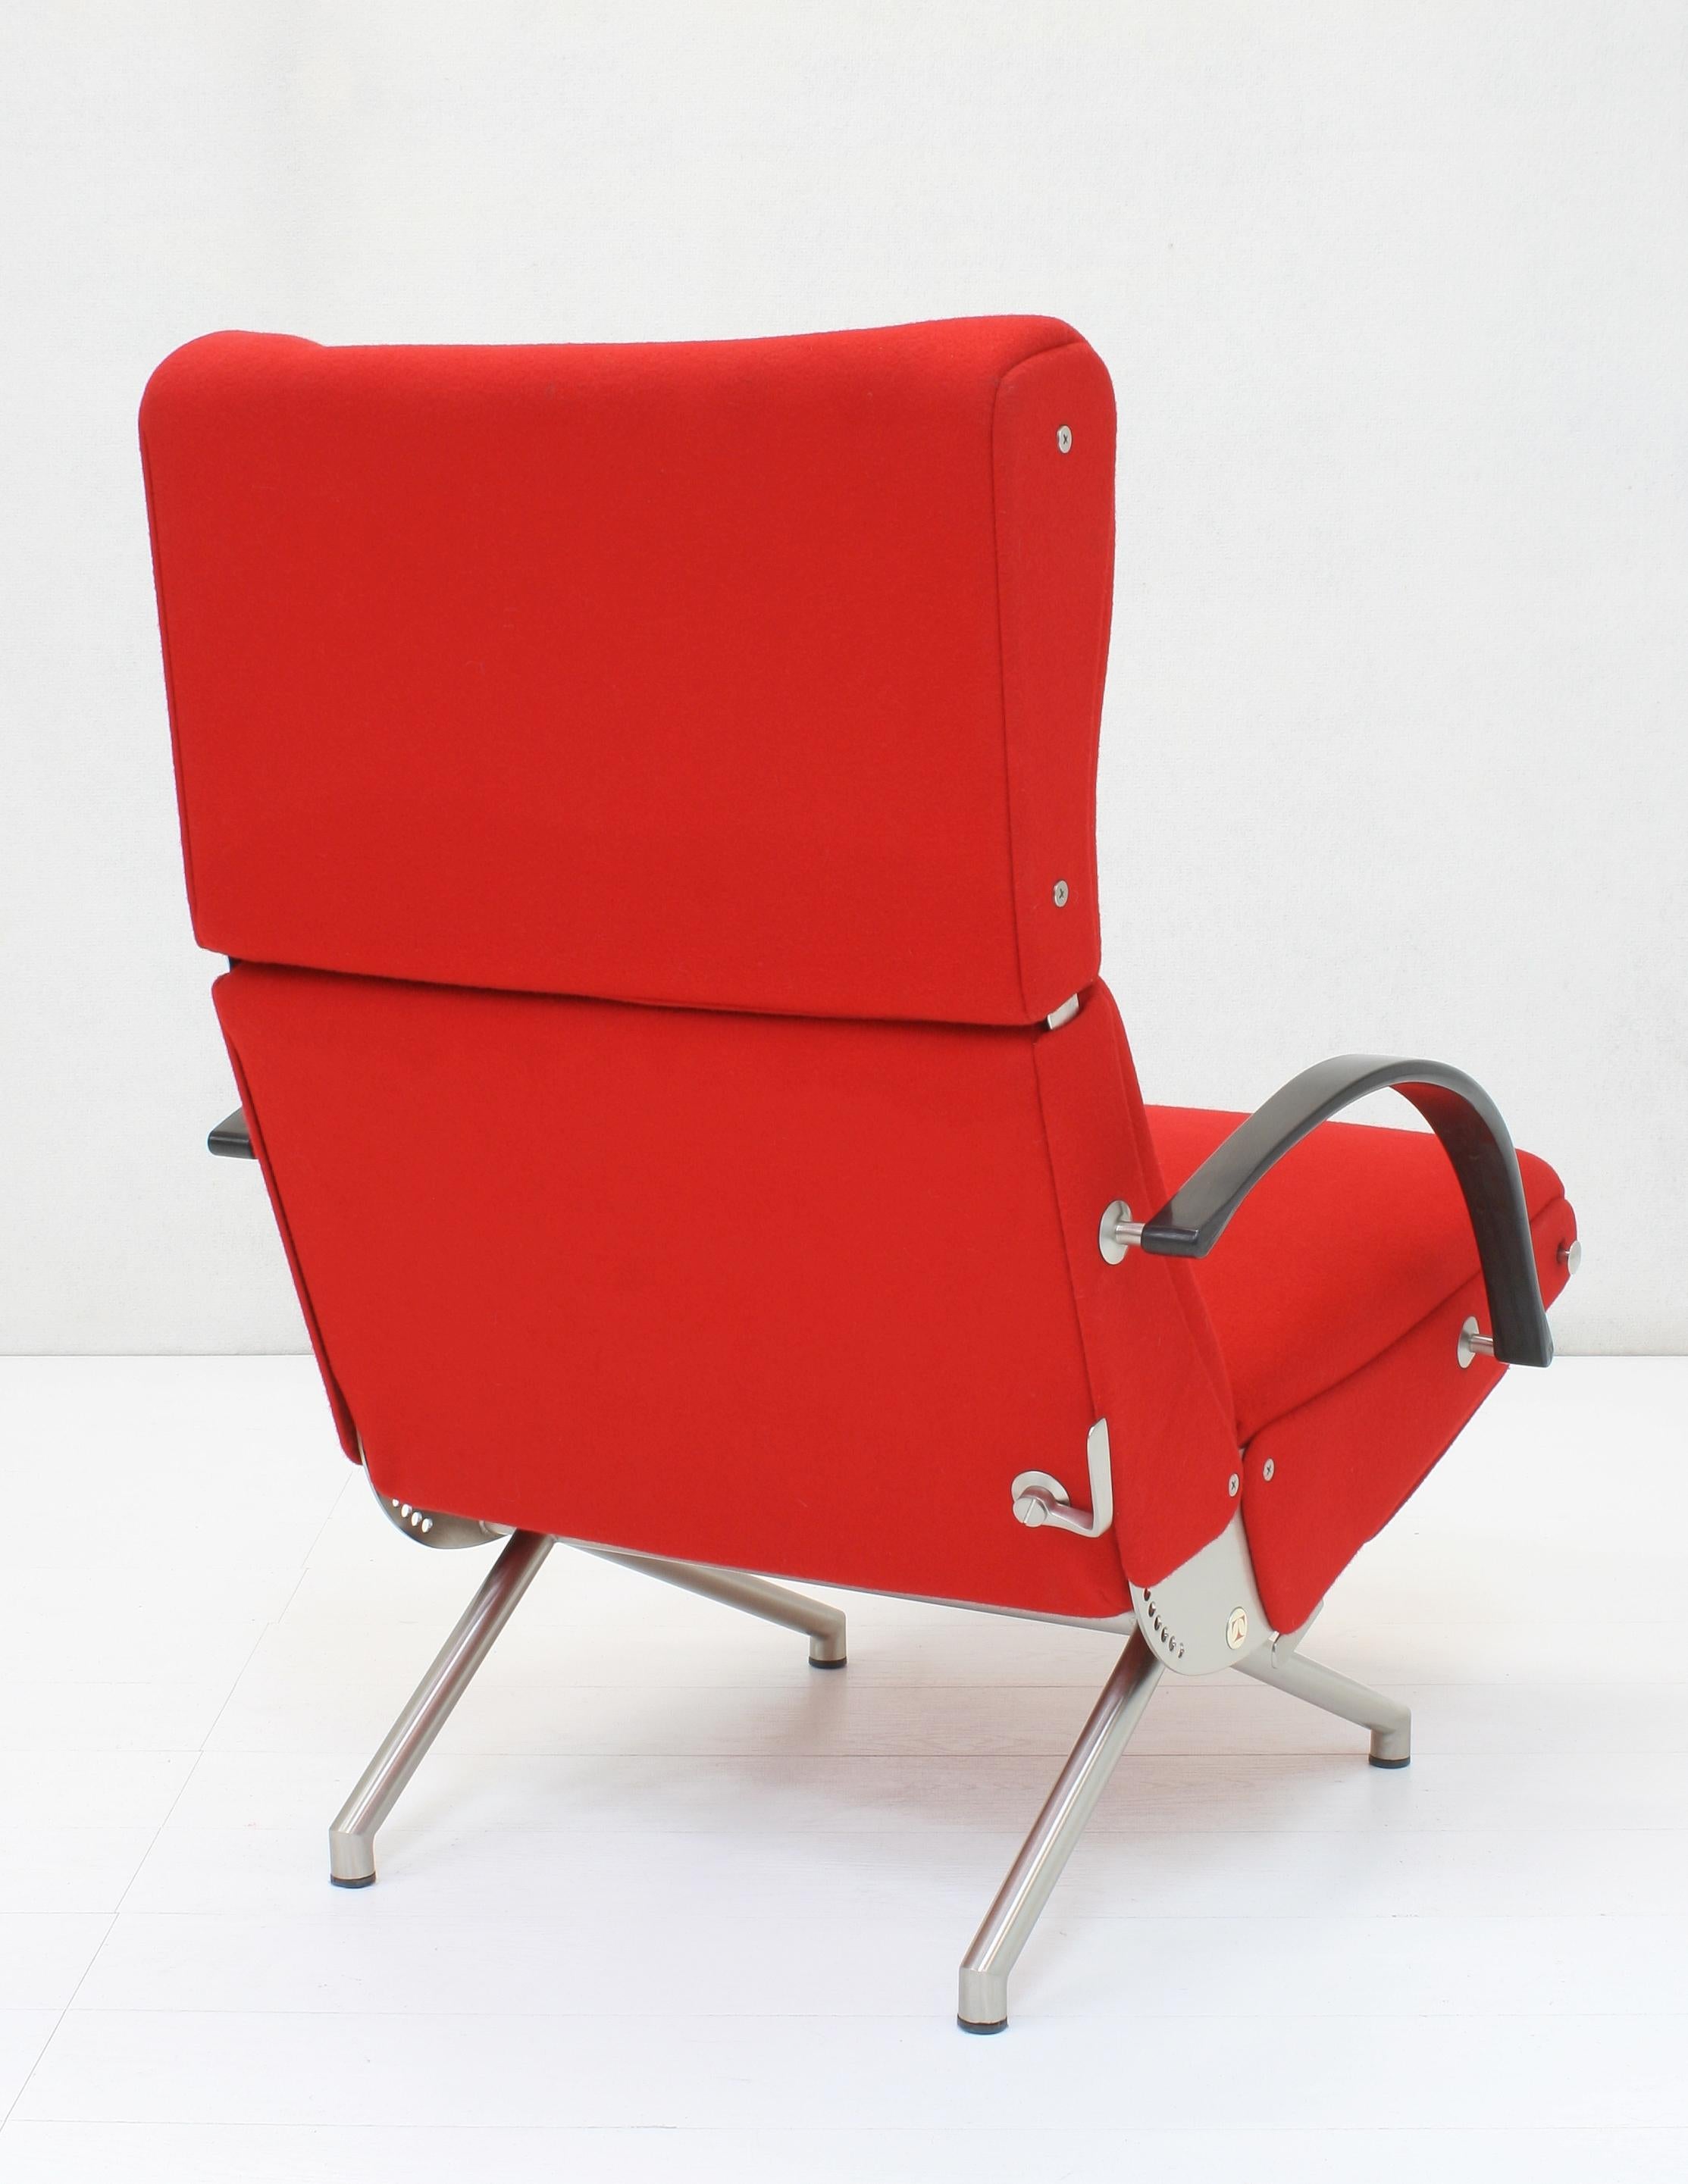 20th Century Adjustable P40 Lounge Chair by Osvaldo Borsani for Tecno spa, Italy